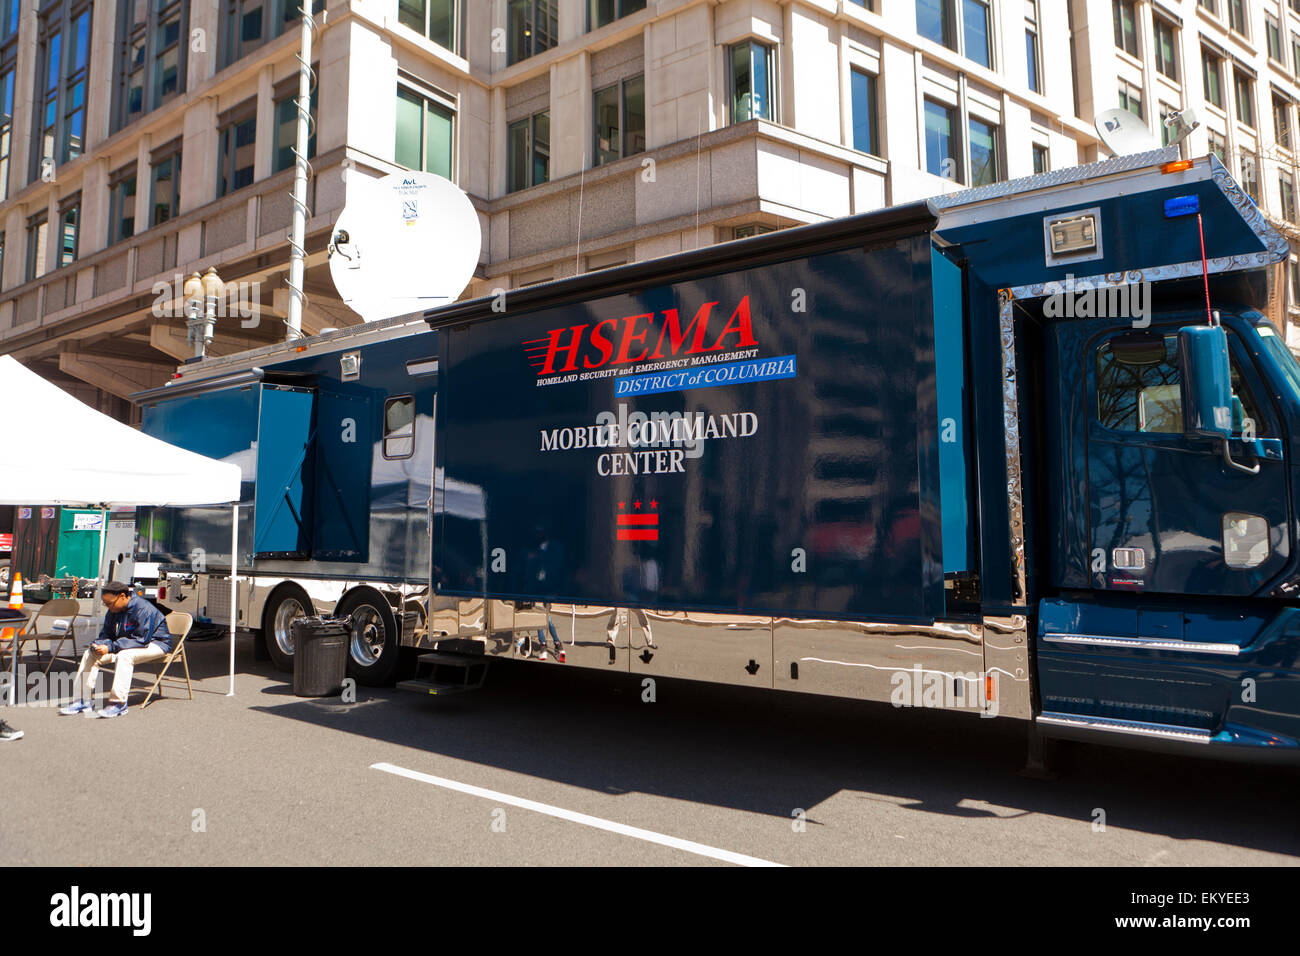 Homeland Security and Emergency Management Mobile Command Center - Washington, DC USA Stock Photo